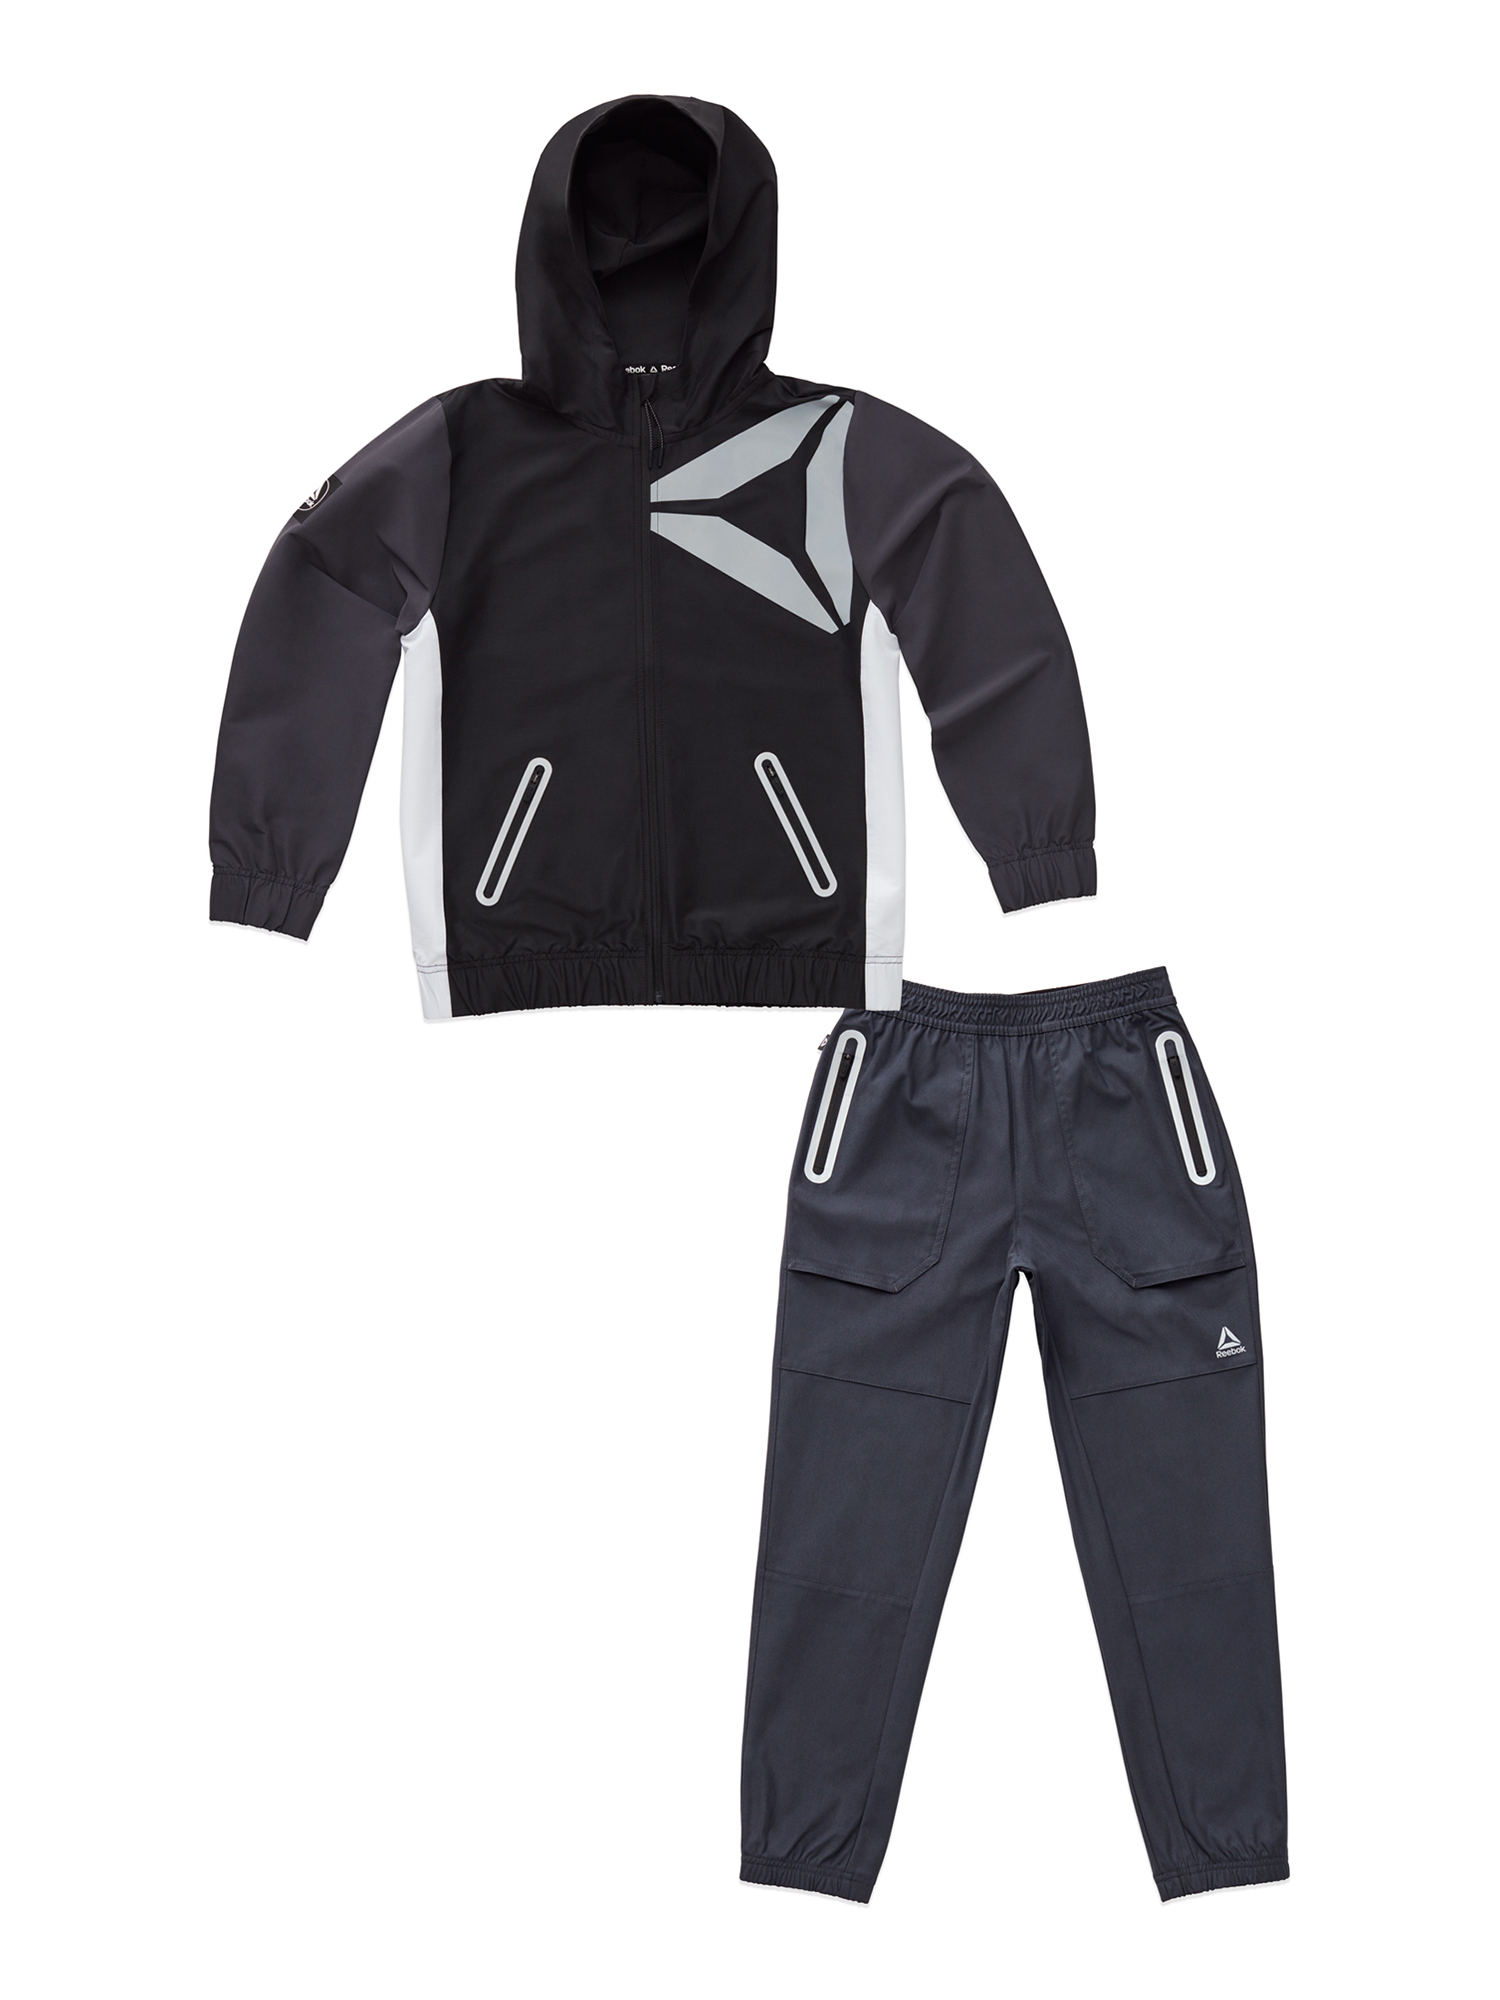 Reebok Boys Transition Jacket and Joggers 2-Piece Set, Sizes 4-18 - image 1 of 5